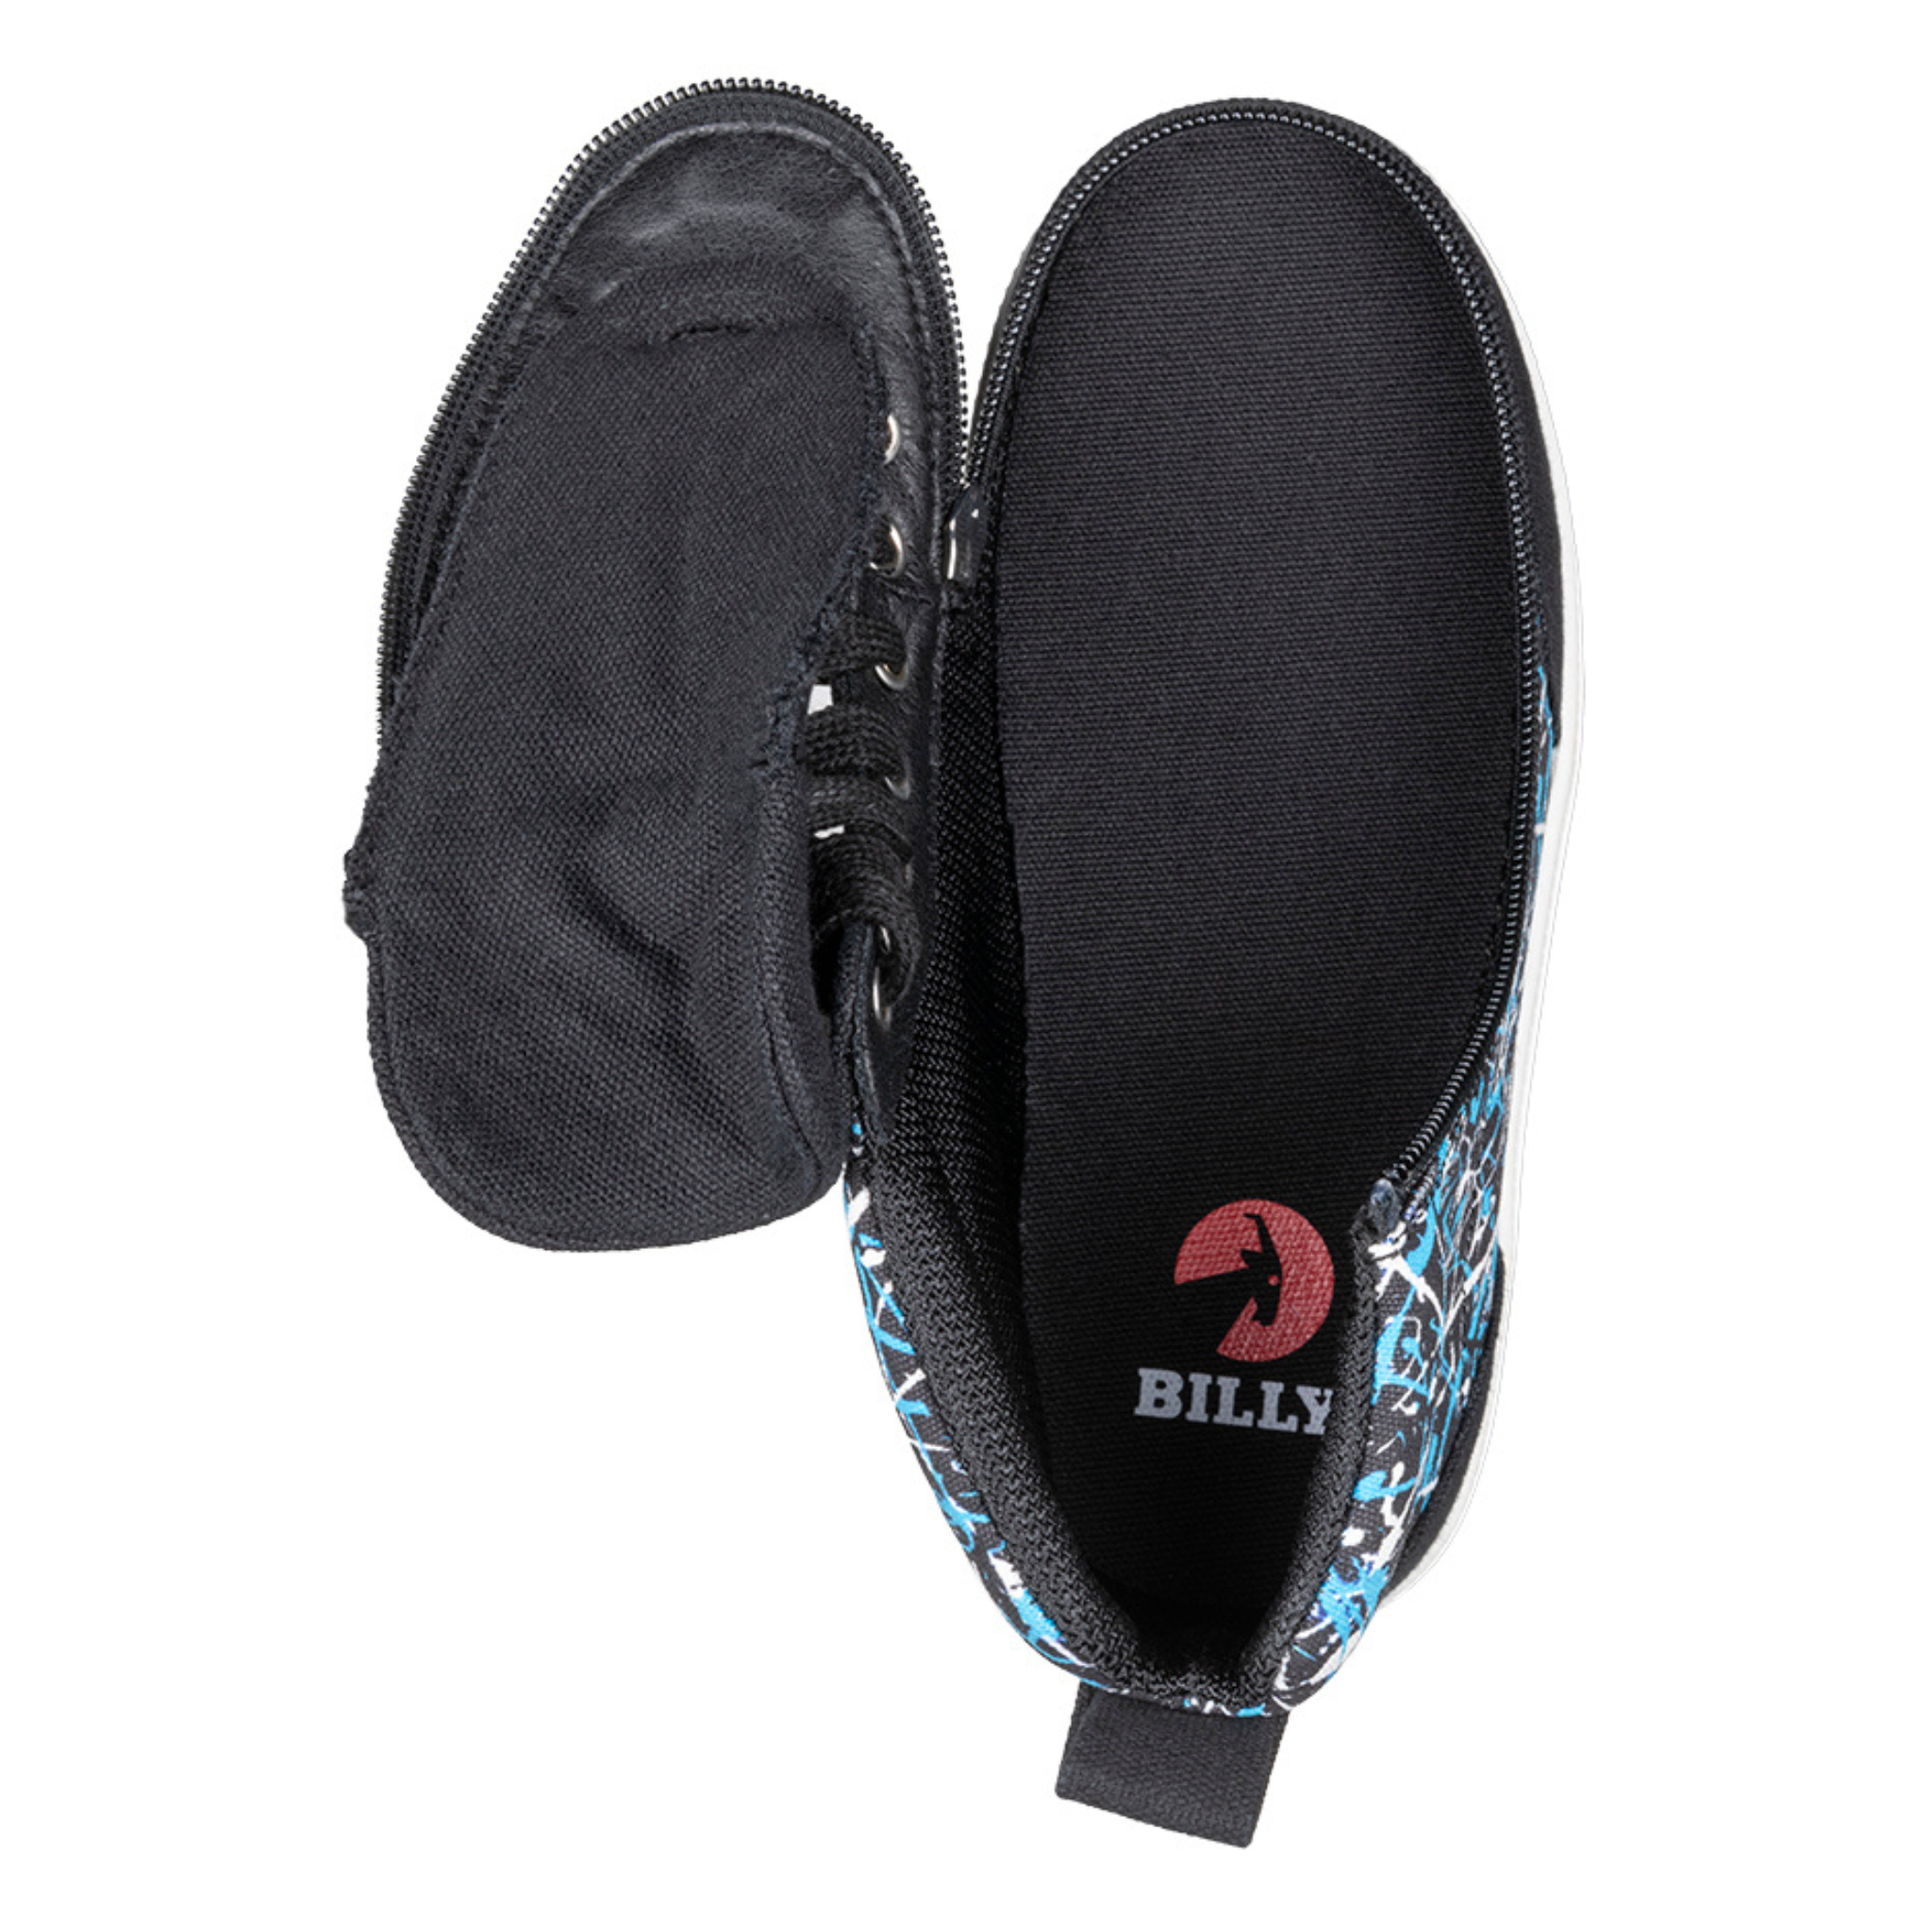 Billy Footwear (Toddler) - High Top D|R Black Graffiti Canvas Shoes